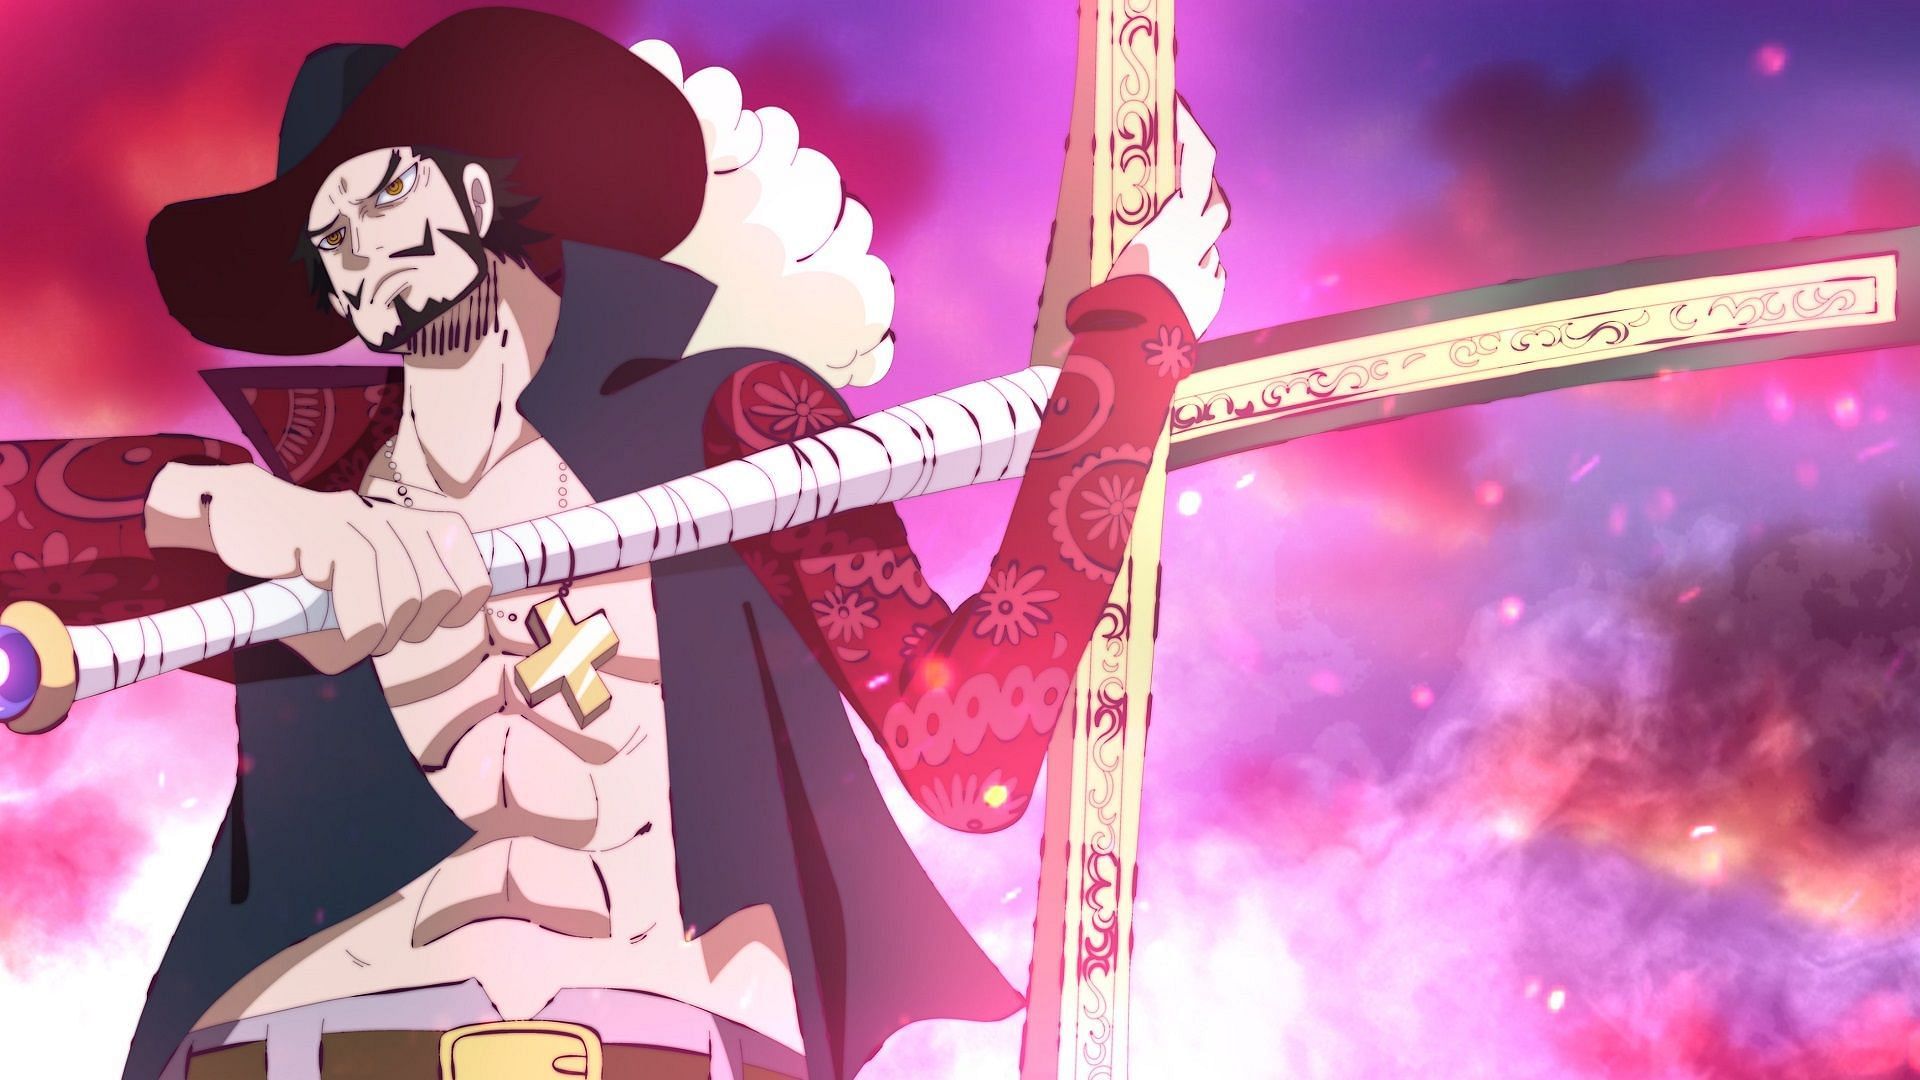 Mihawk is one of the most powerful Haki users in One Piece (Image via Eiichiro Oda/Shueisha, One Piece)